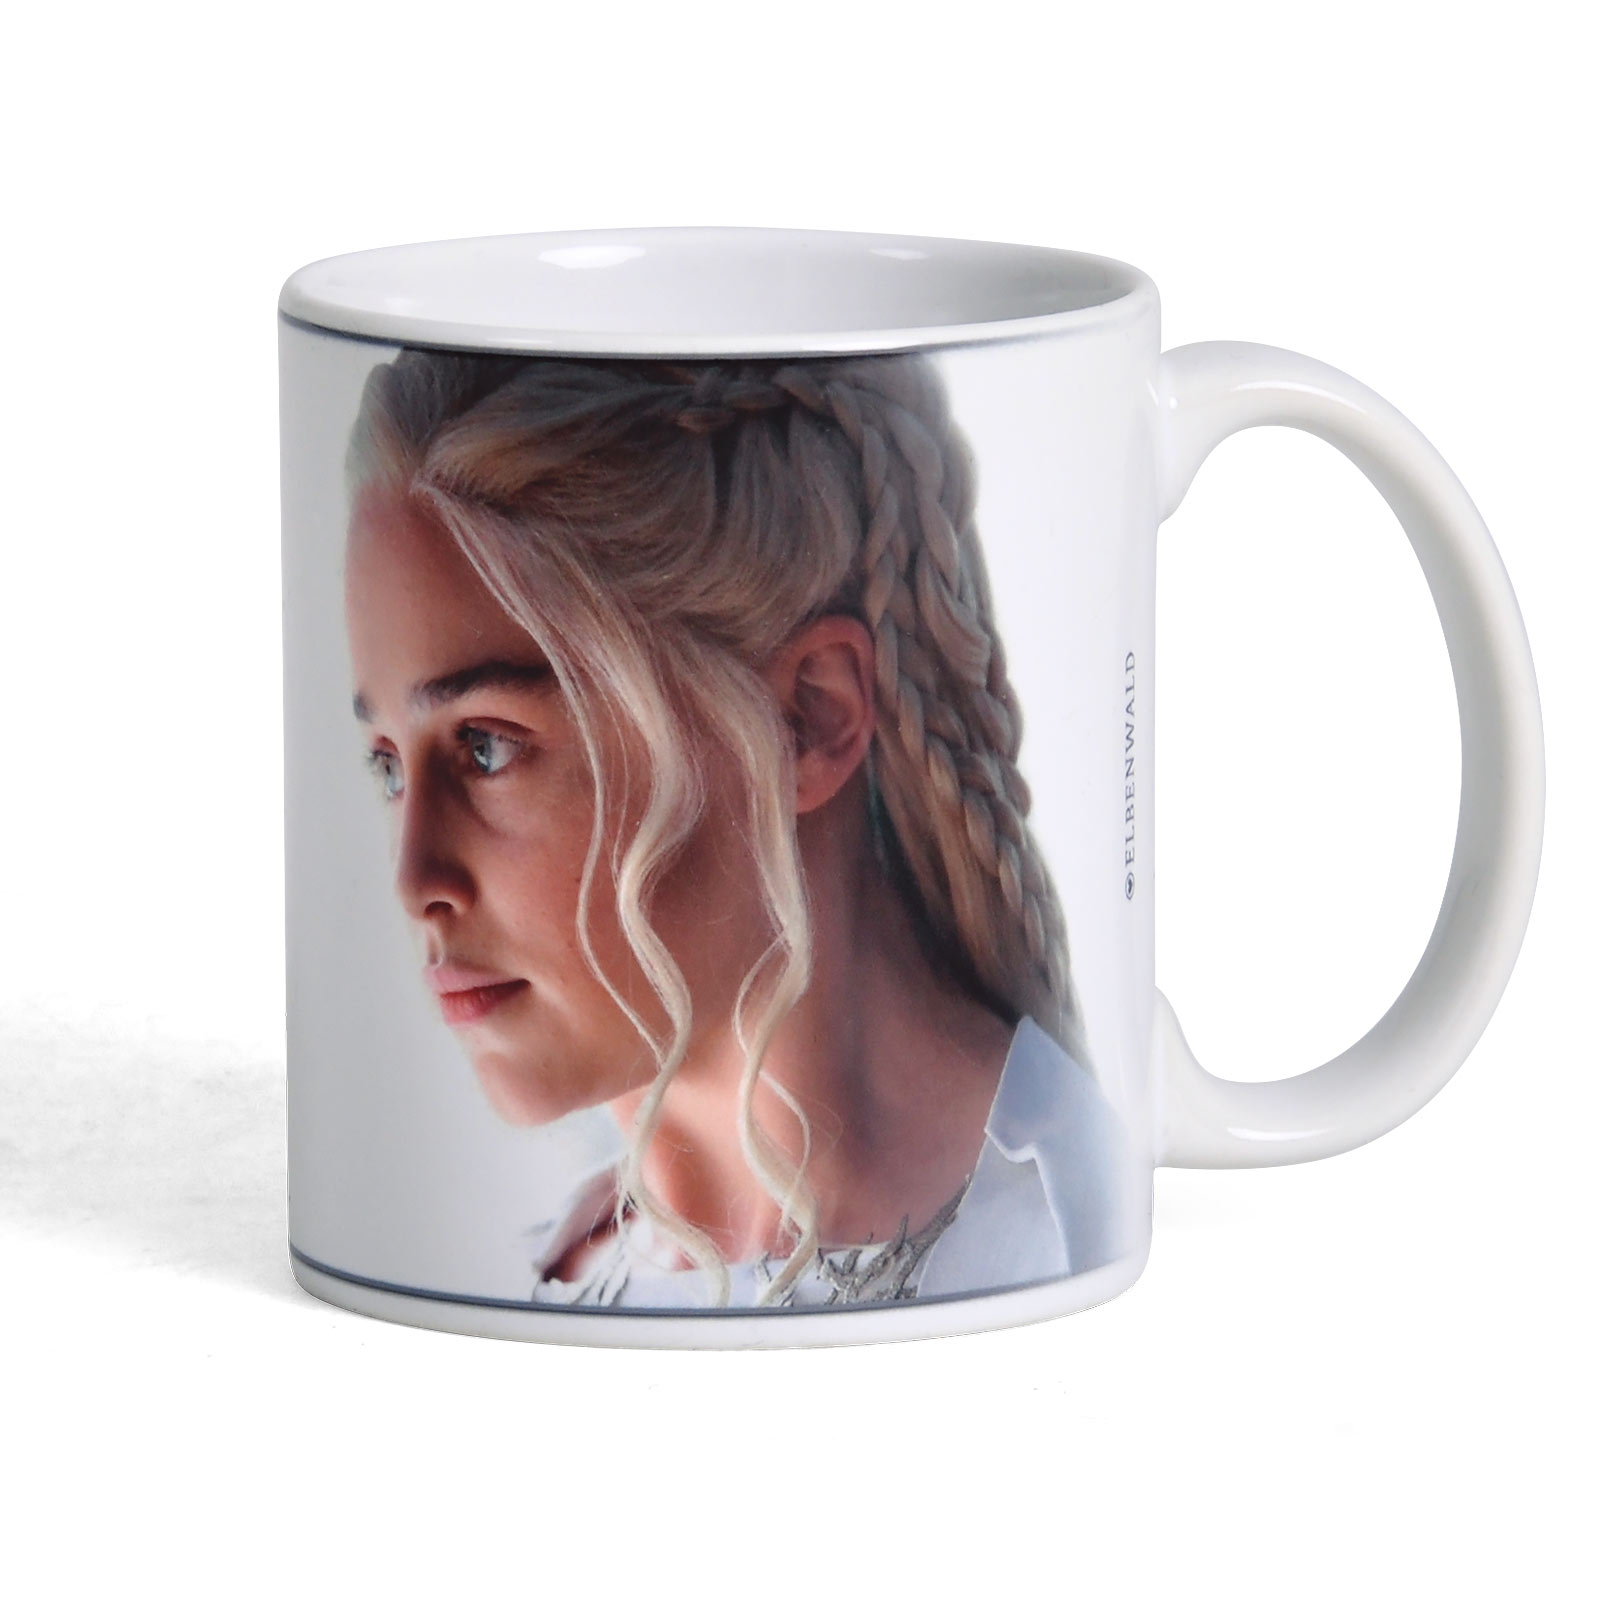 Game of Thrones - Daenerys Targaryen Tasse weiß